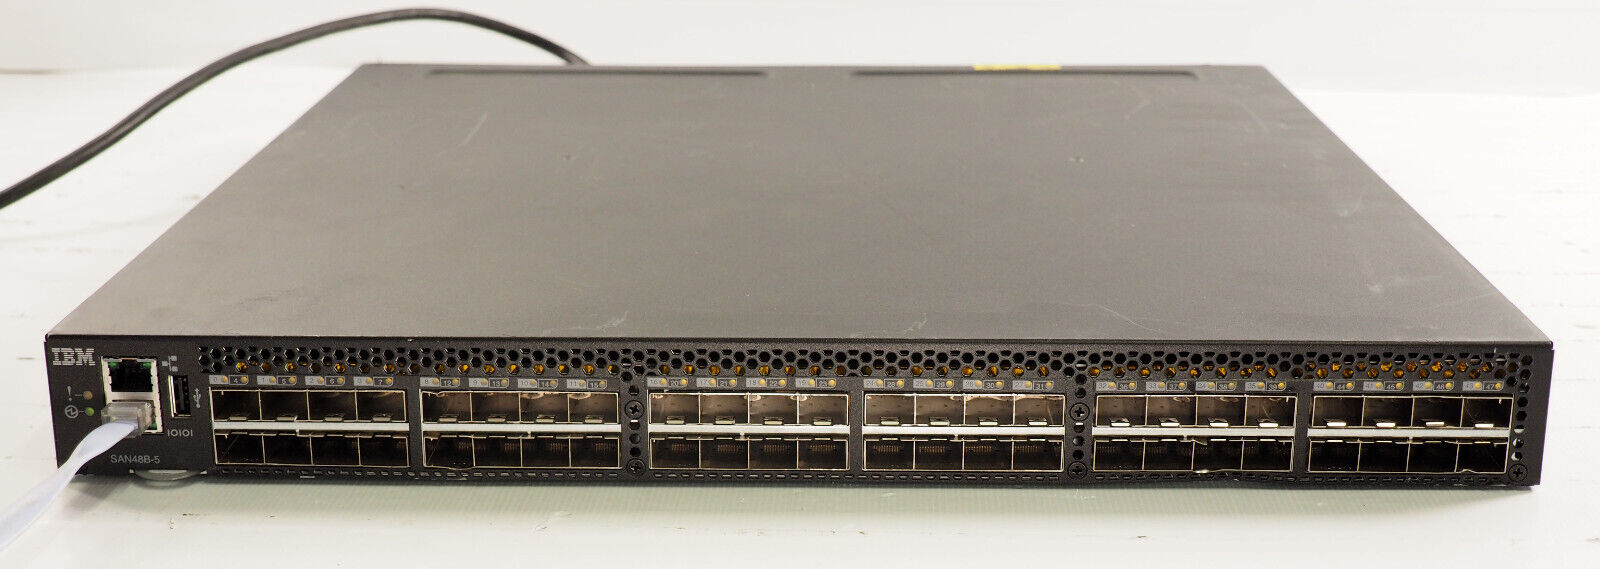 IBM SAN48B-5 2498-F48 480SFP Port System Storage Fibre Channel  Password Protect